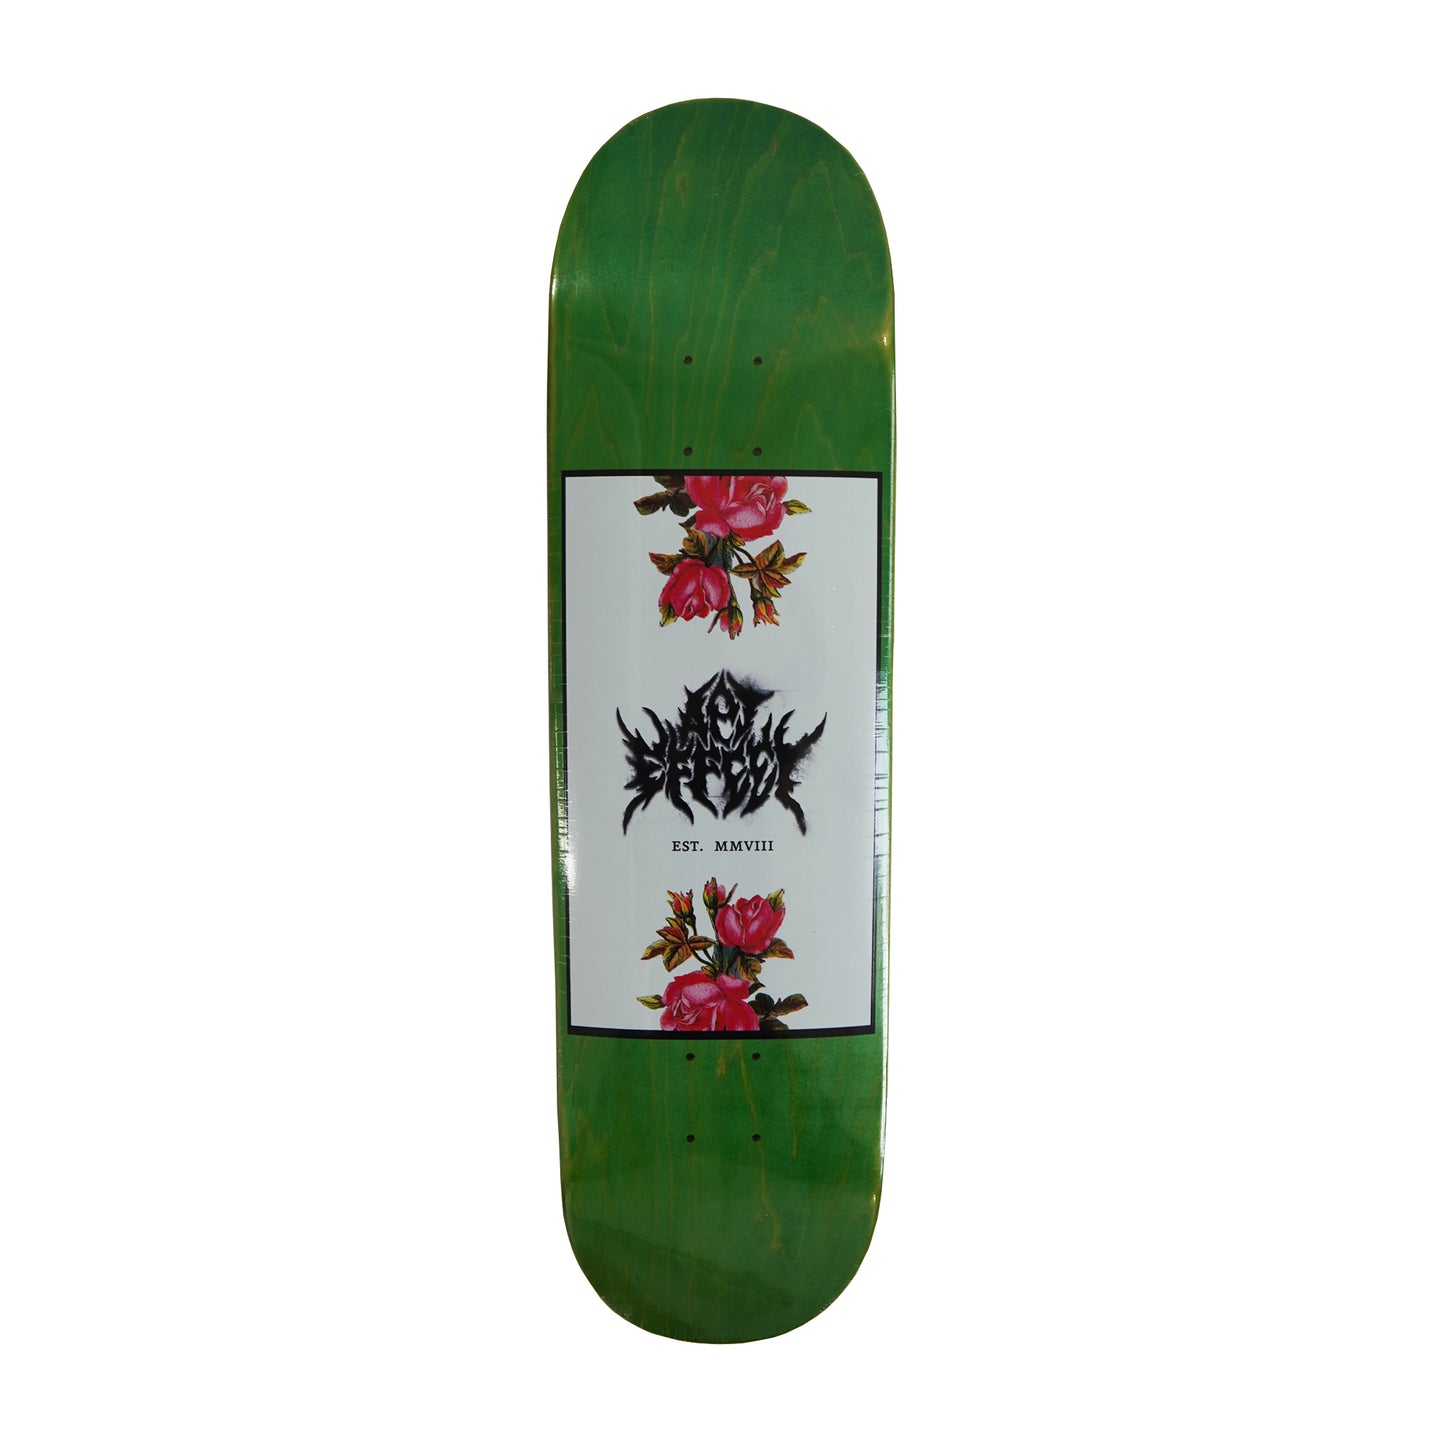 APT. Skateboard GREEN